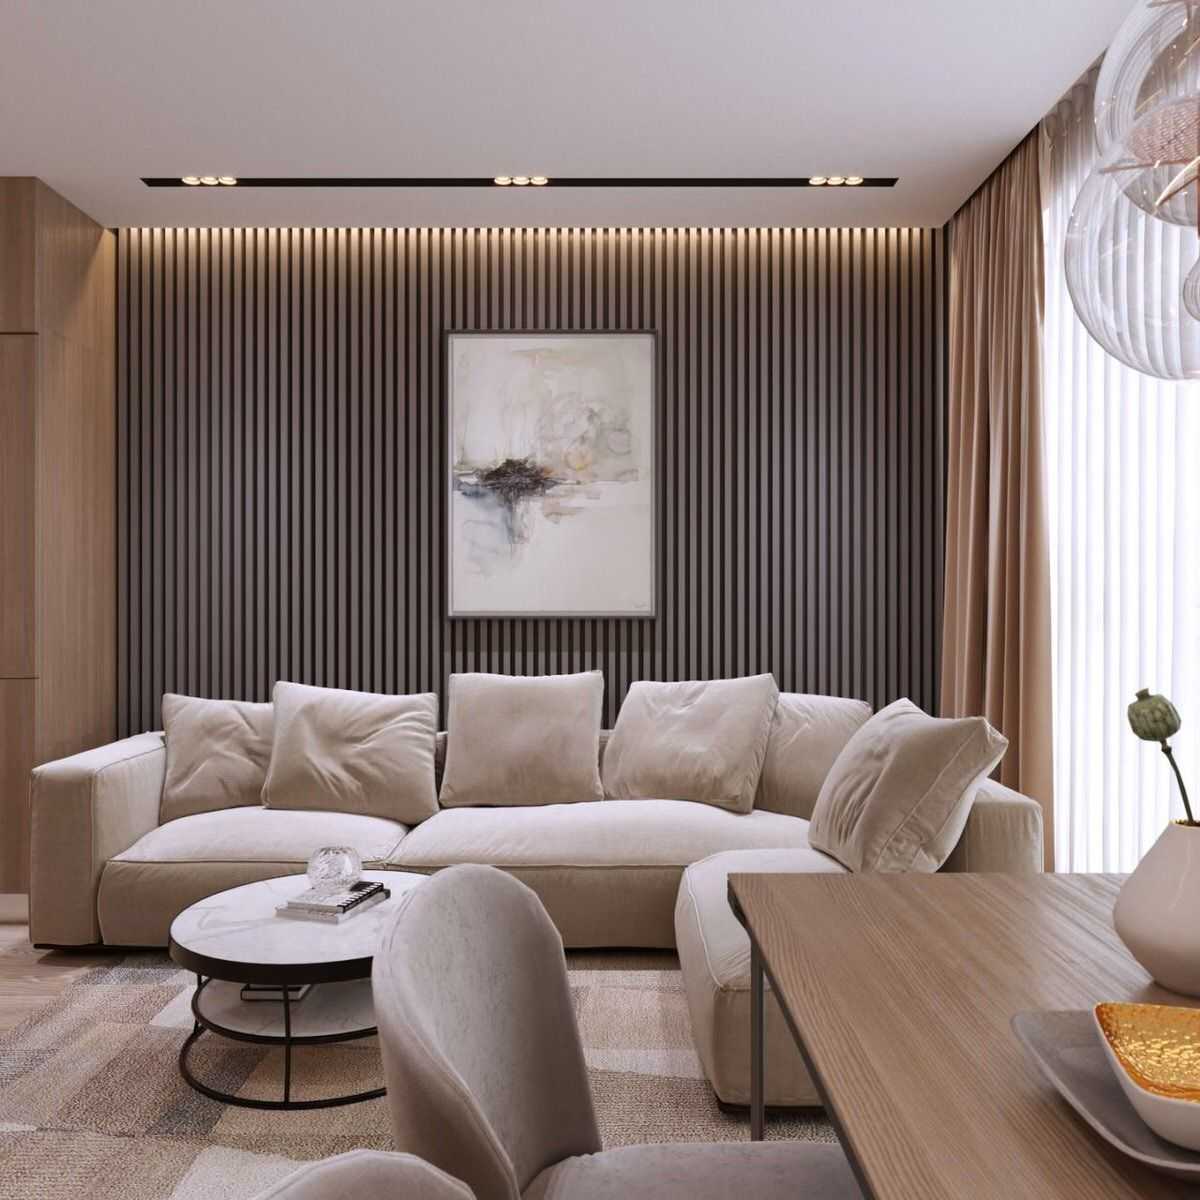 Interior Design  
in a Modern Style